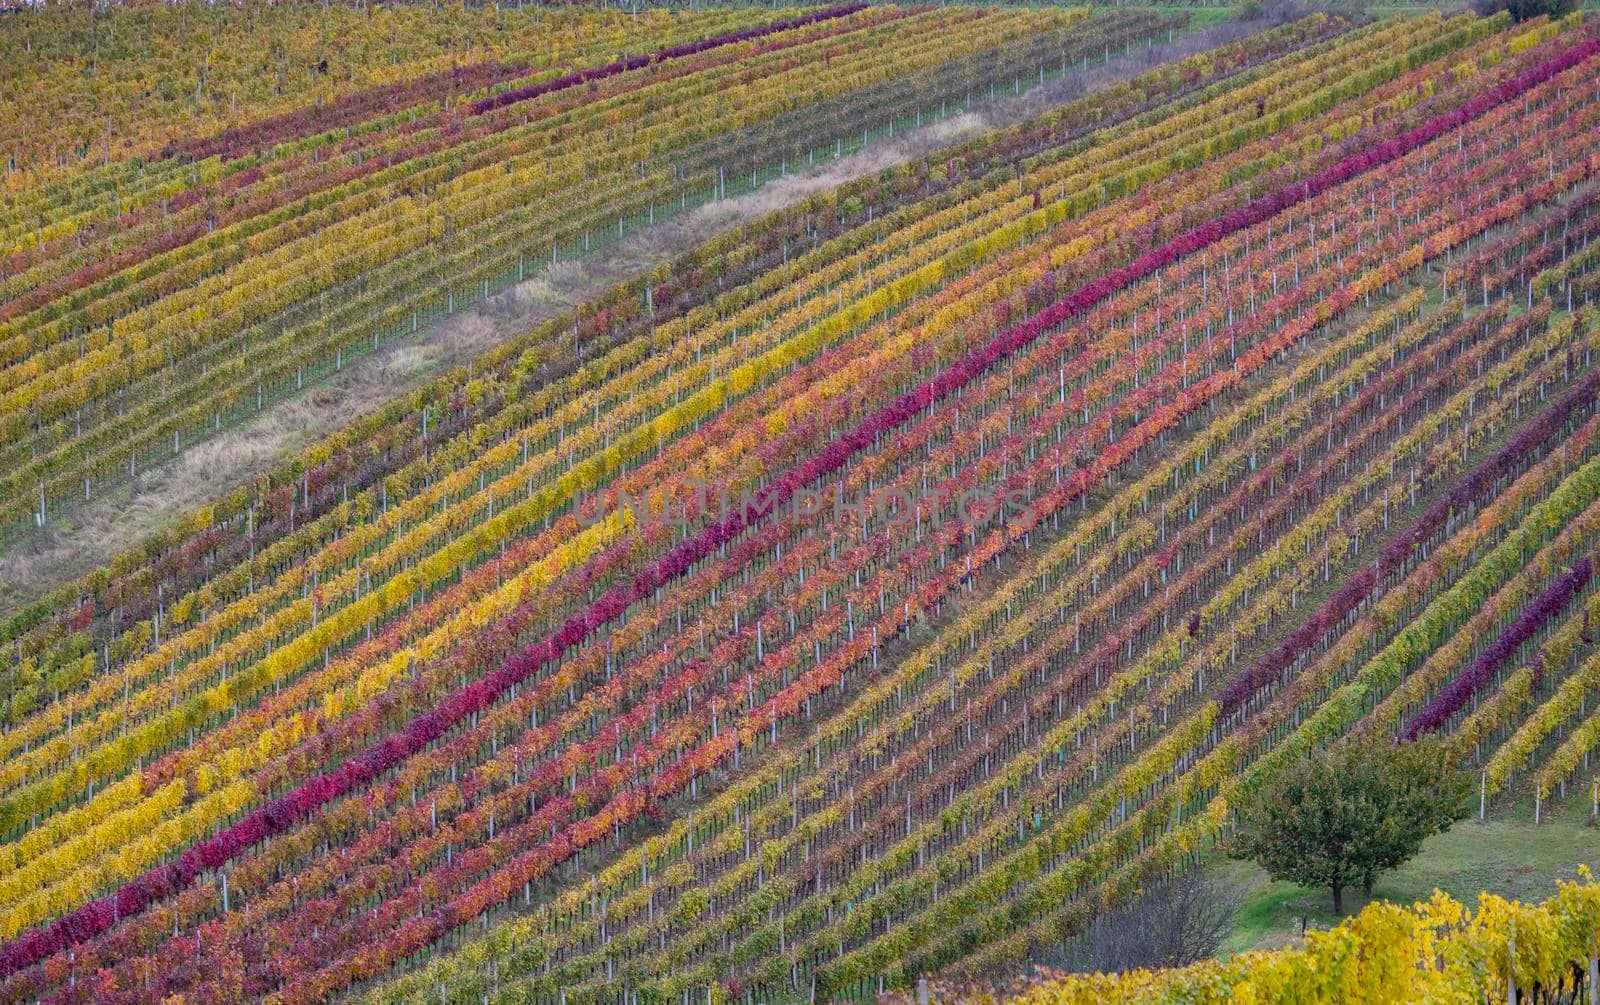 Autumn vineyard near Cejkovice, Southern Moravia, Czech Republic